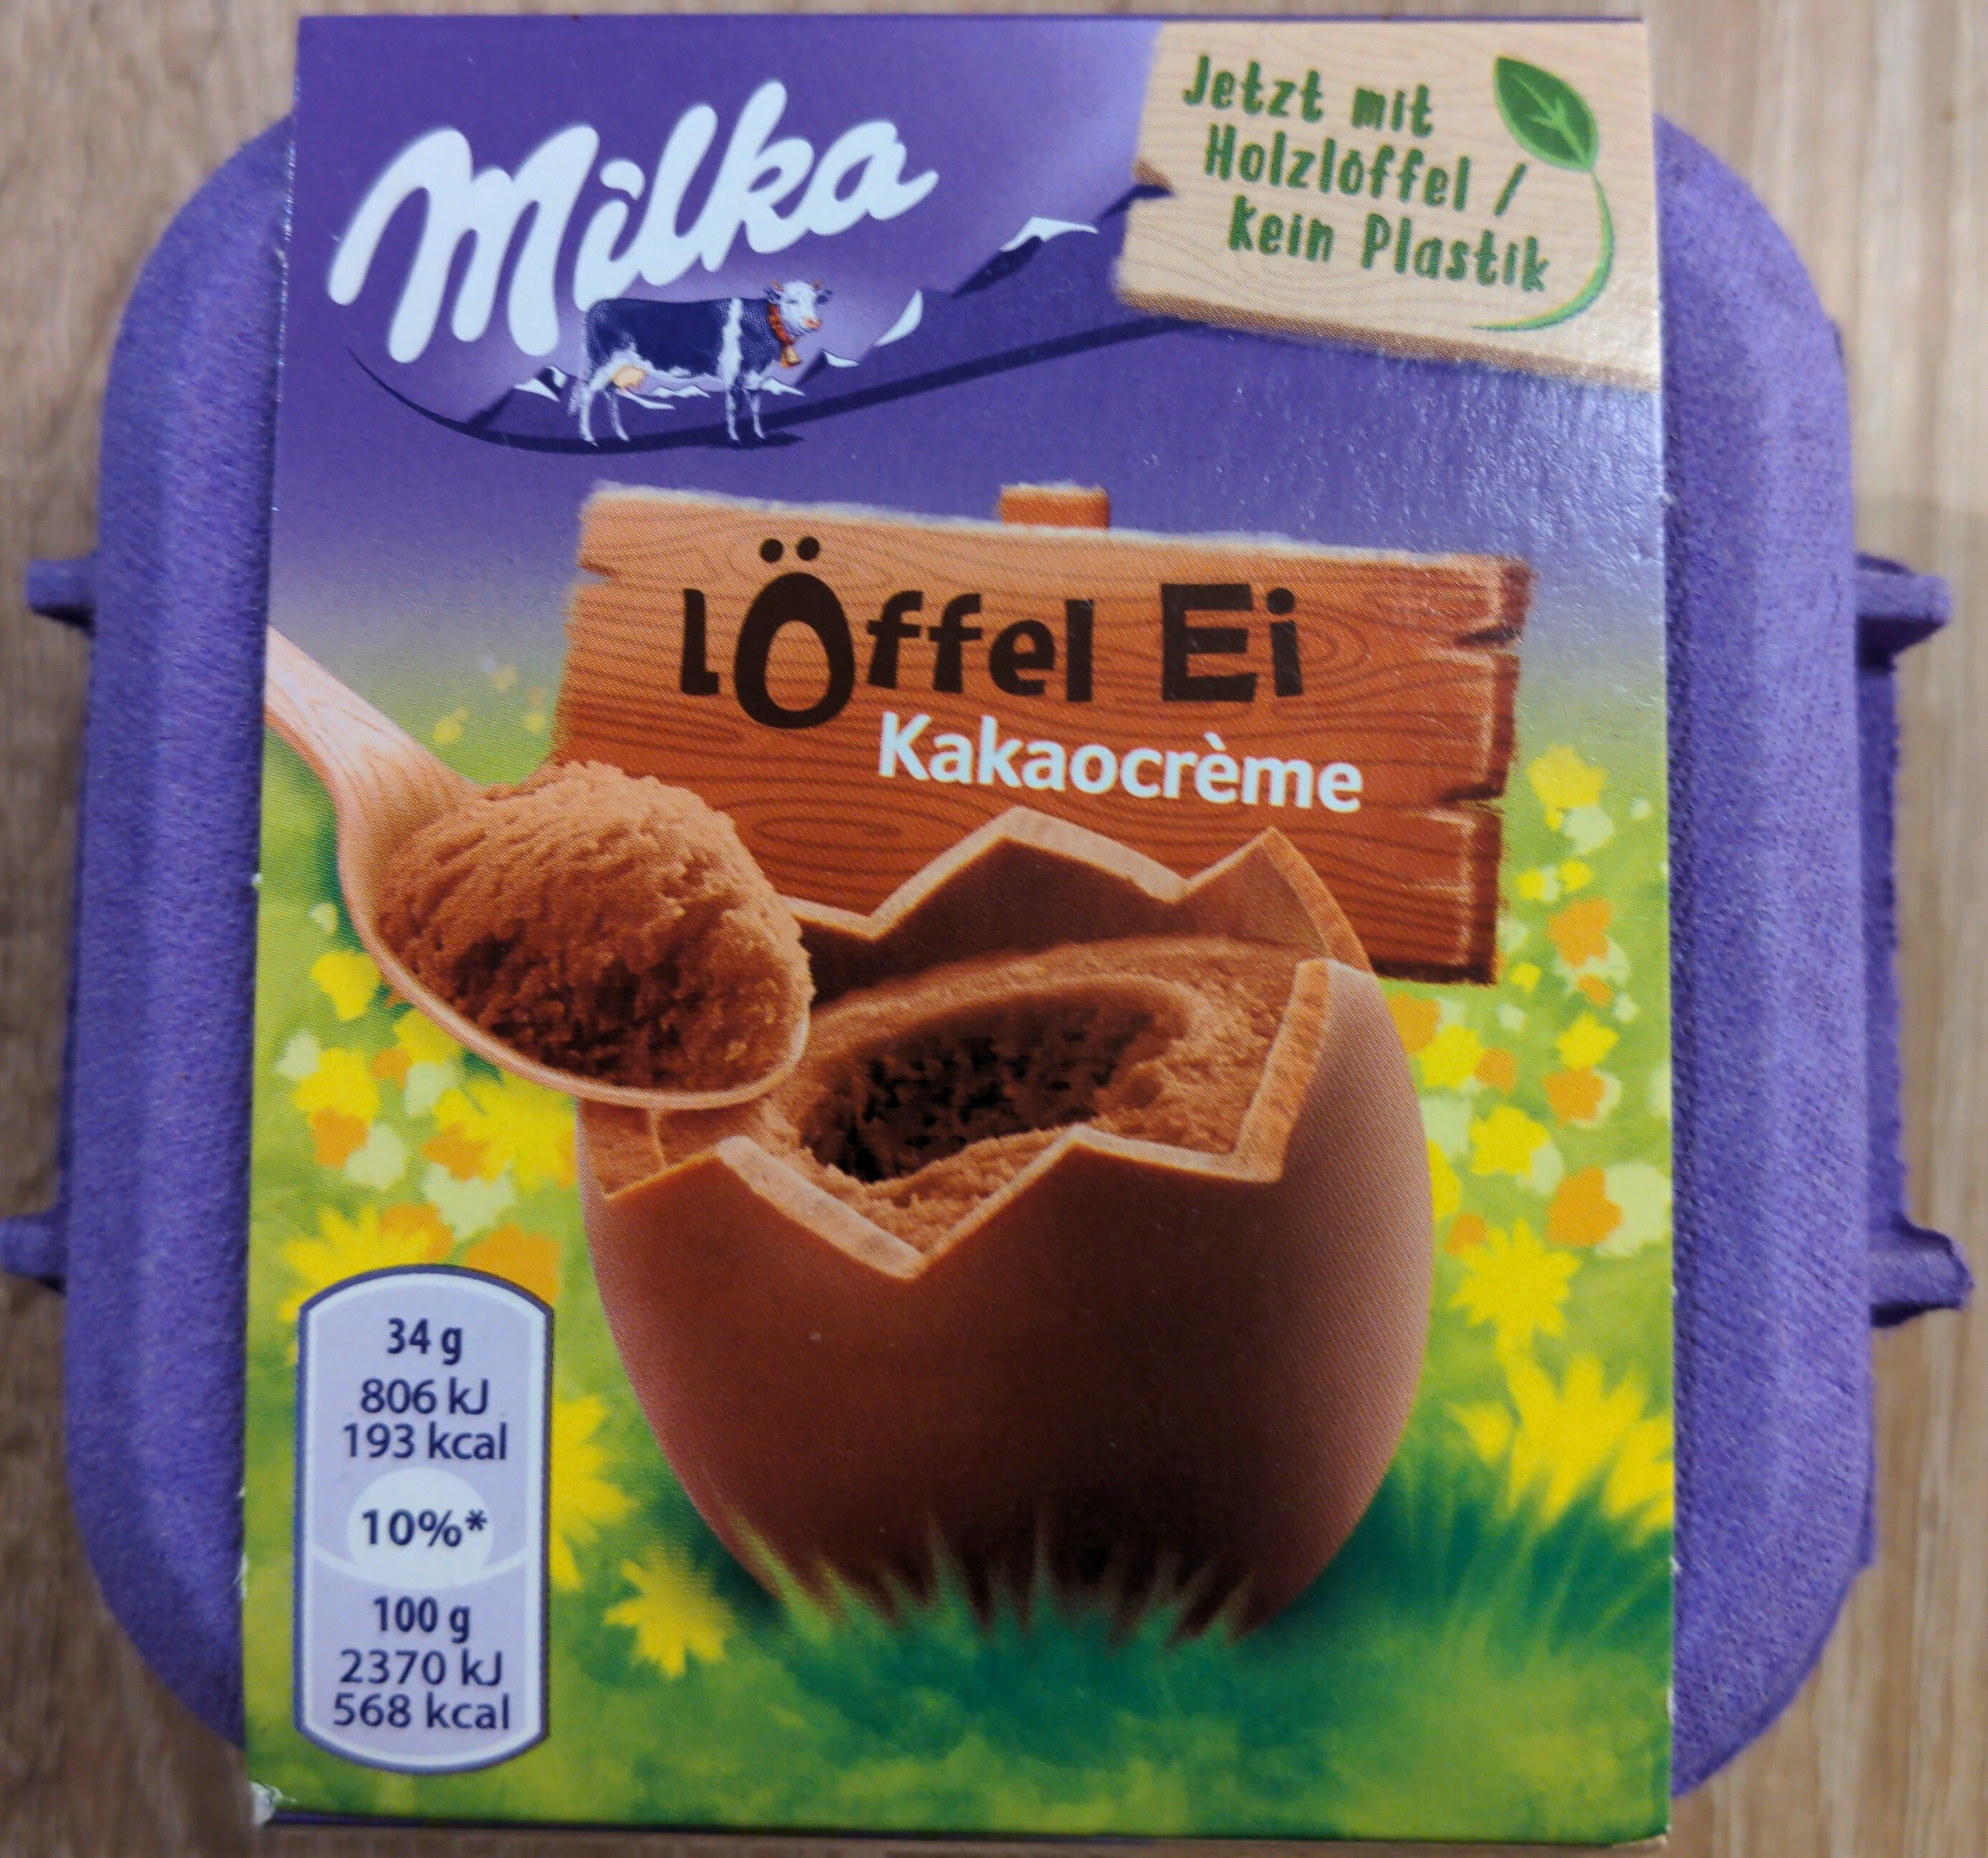 Löffel Ei Kakaocrème - Product - fr